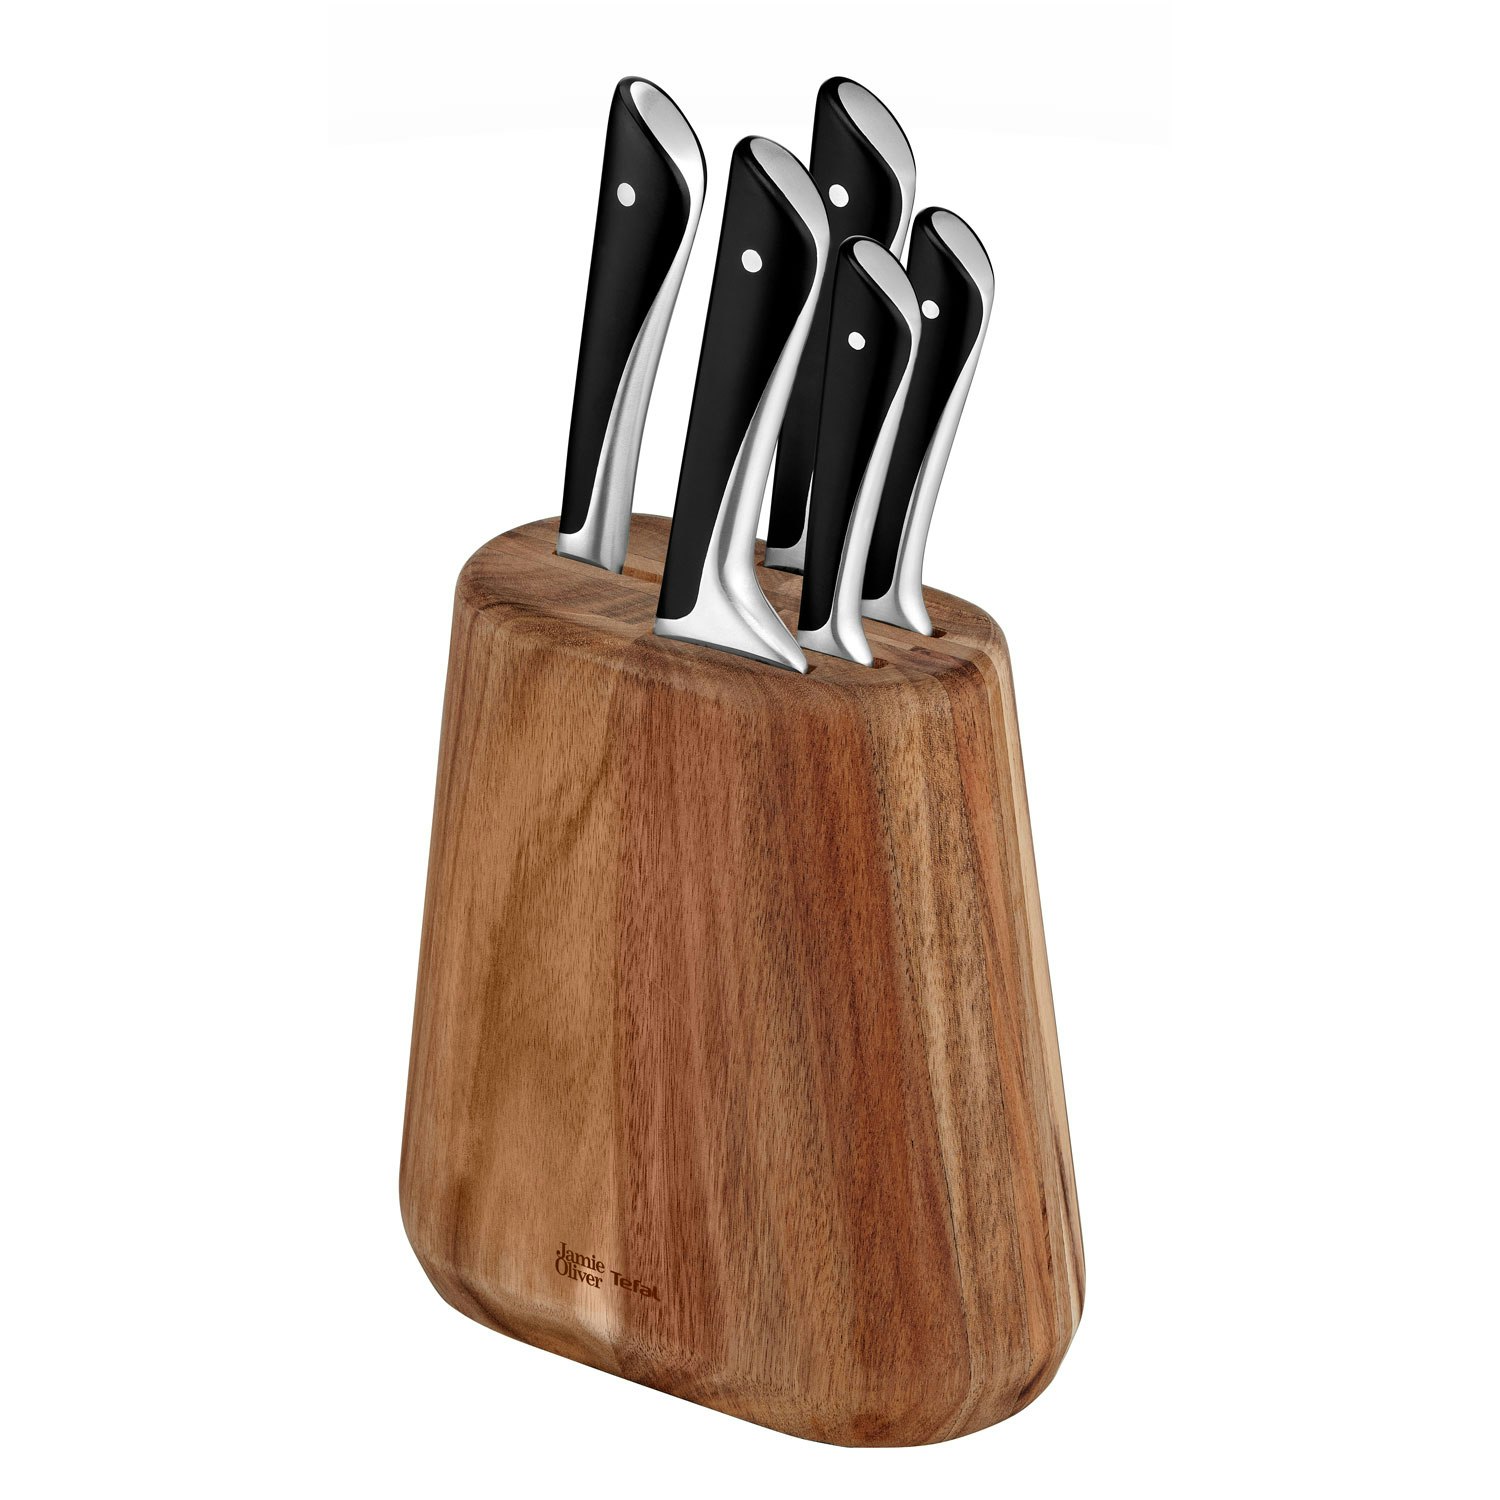 Wusthof Classic soft cheese knife 5 33/64 inch black – Shopdecor